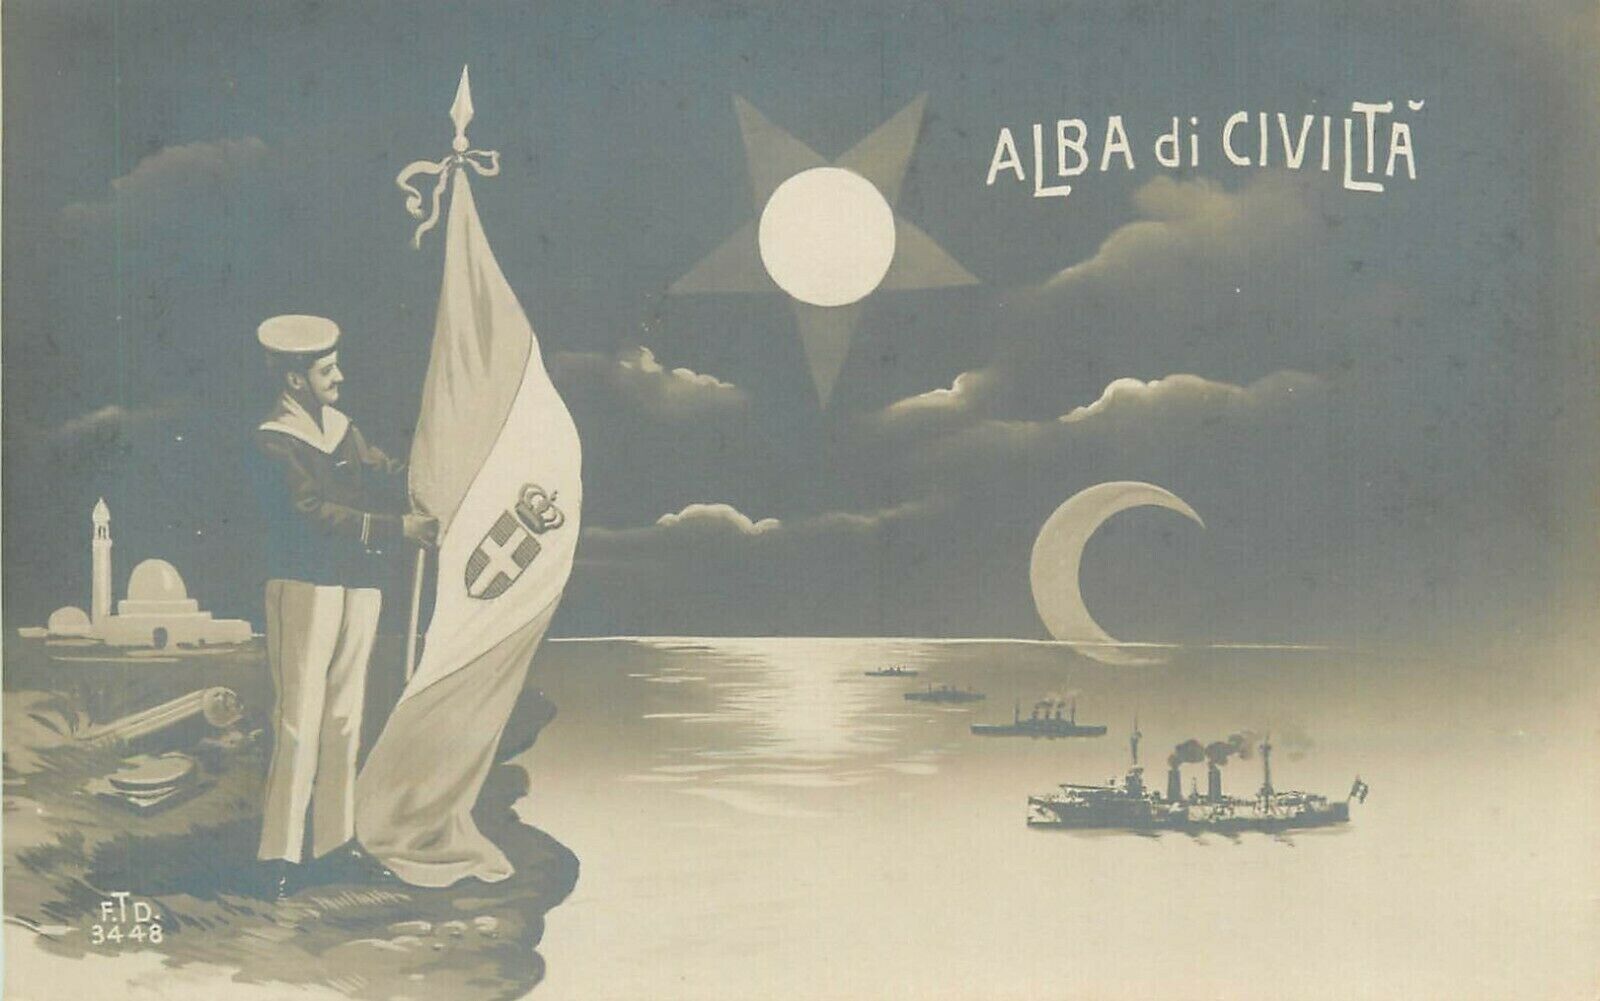 Italian-Turkish war fleet patriotic sailor unrolling the flag in Libya c.1911